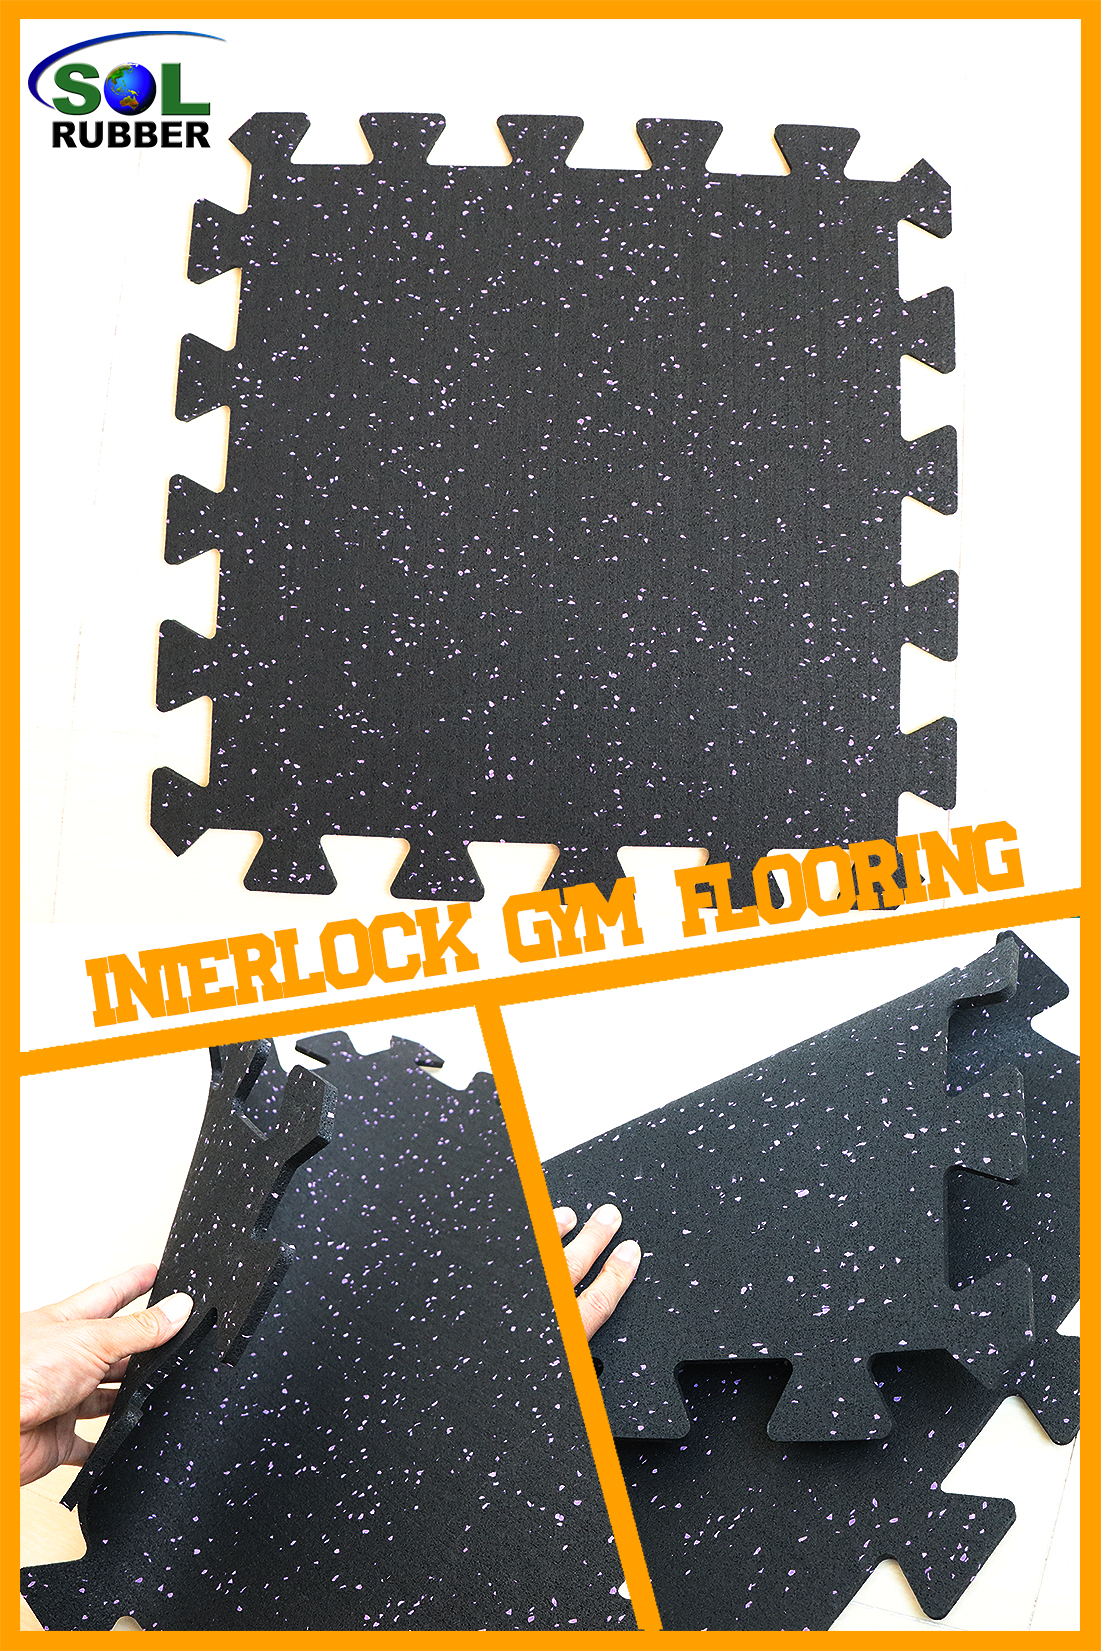 SOL RUBBER interlocking gym floor rubber tiles (156)